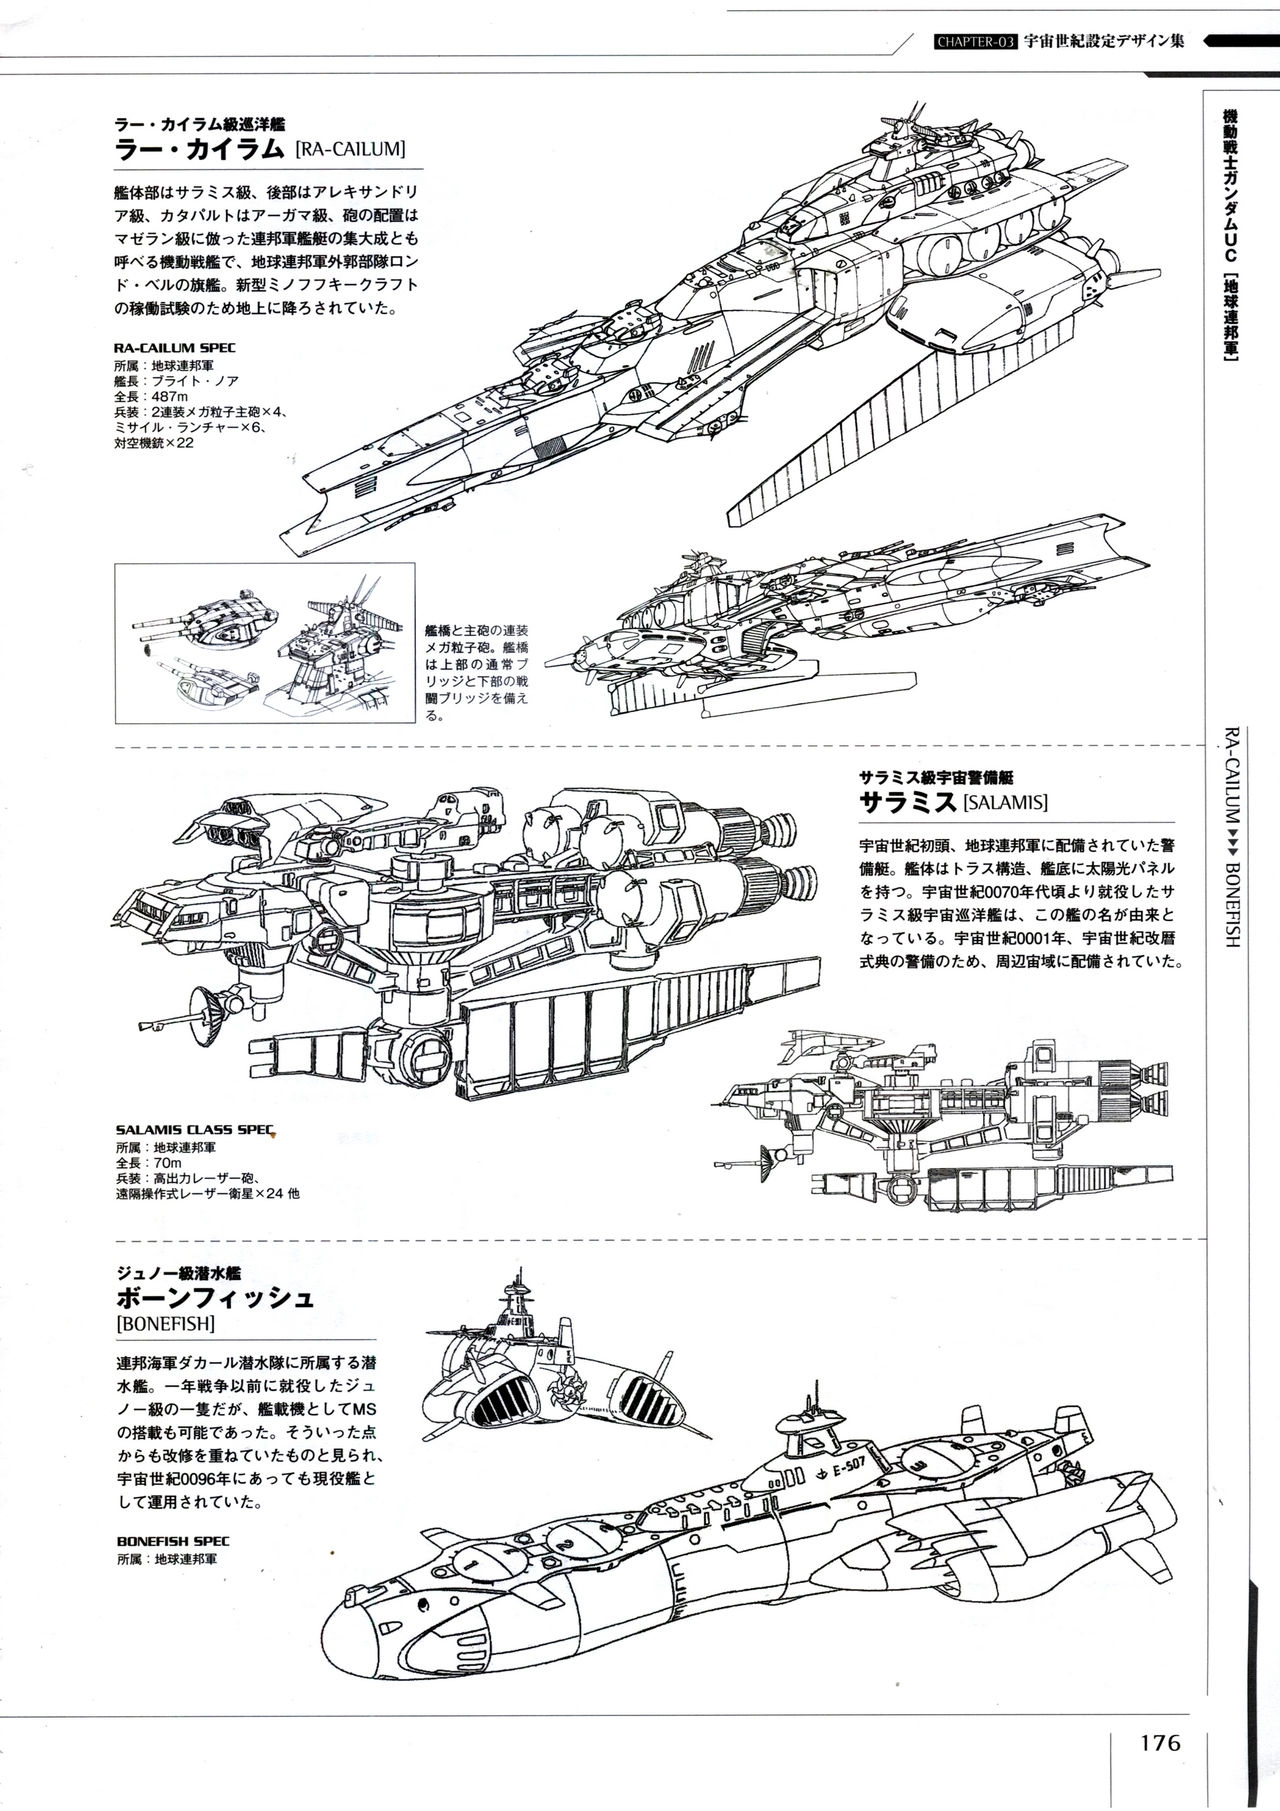 Mobile Suit Gundam - Ship & Aerospace Plane Encyclopedia - Revised Edition 181